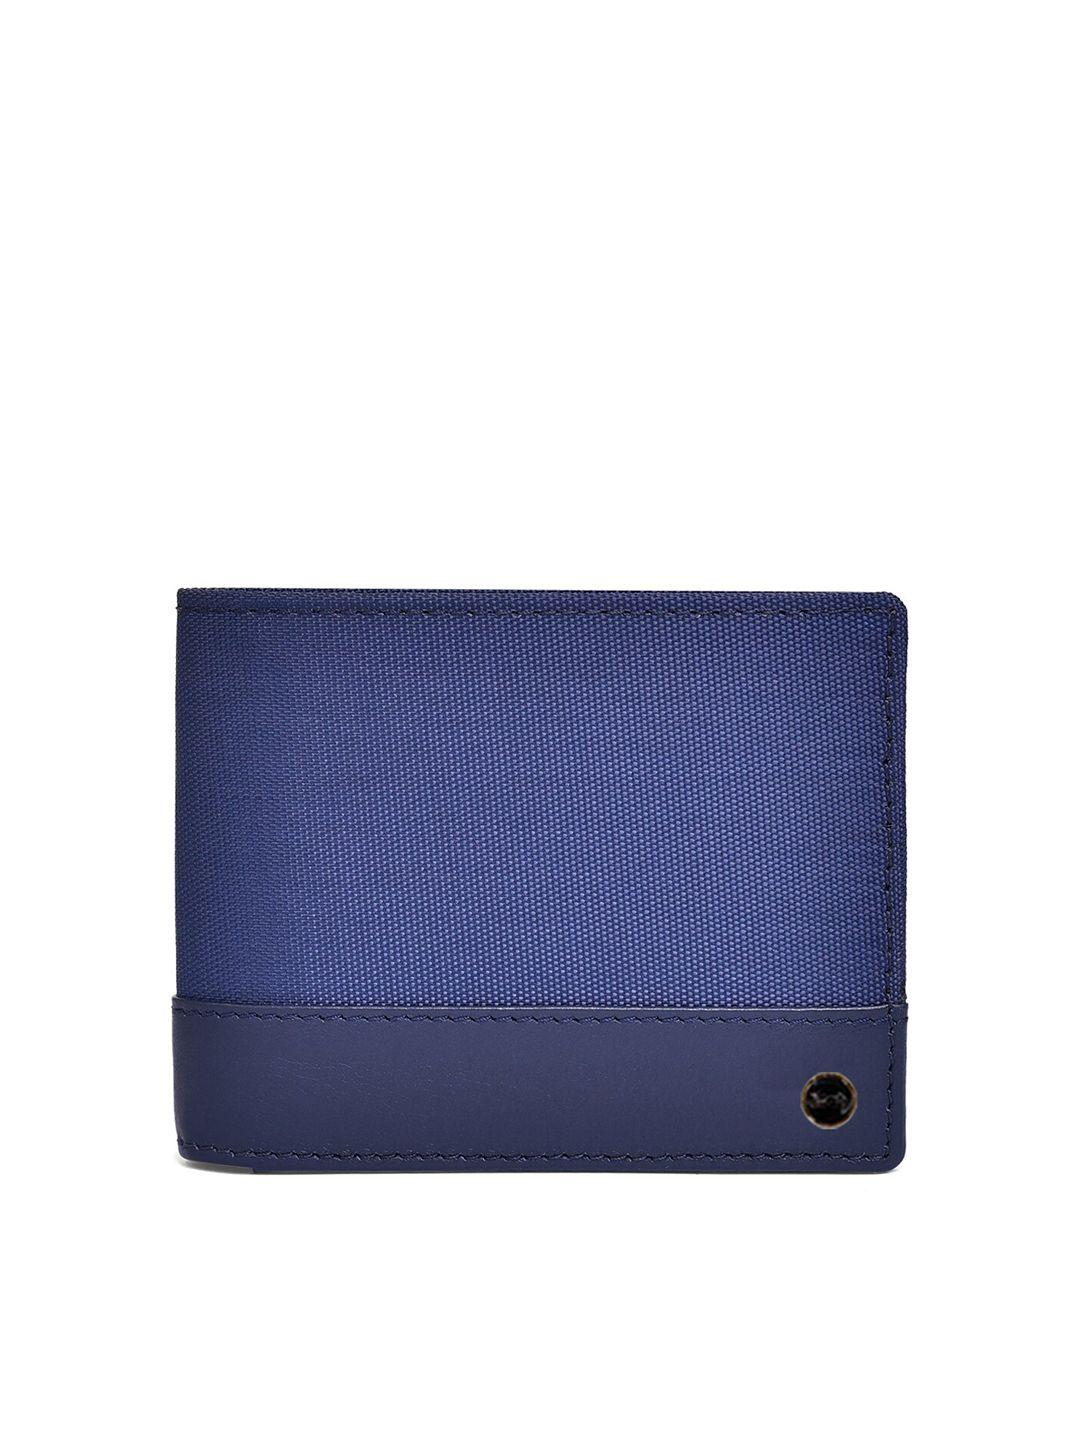 belwaba men navy blue textured leather two fold wallet